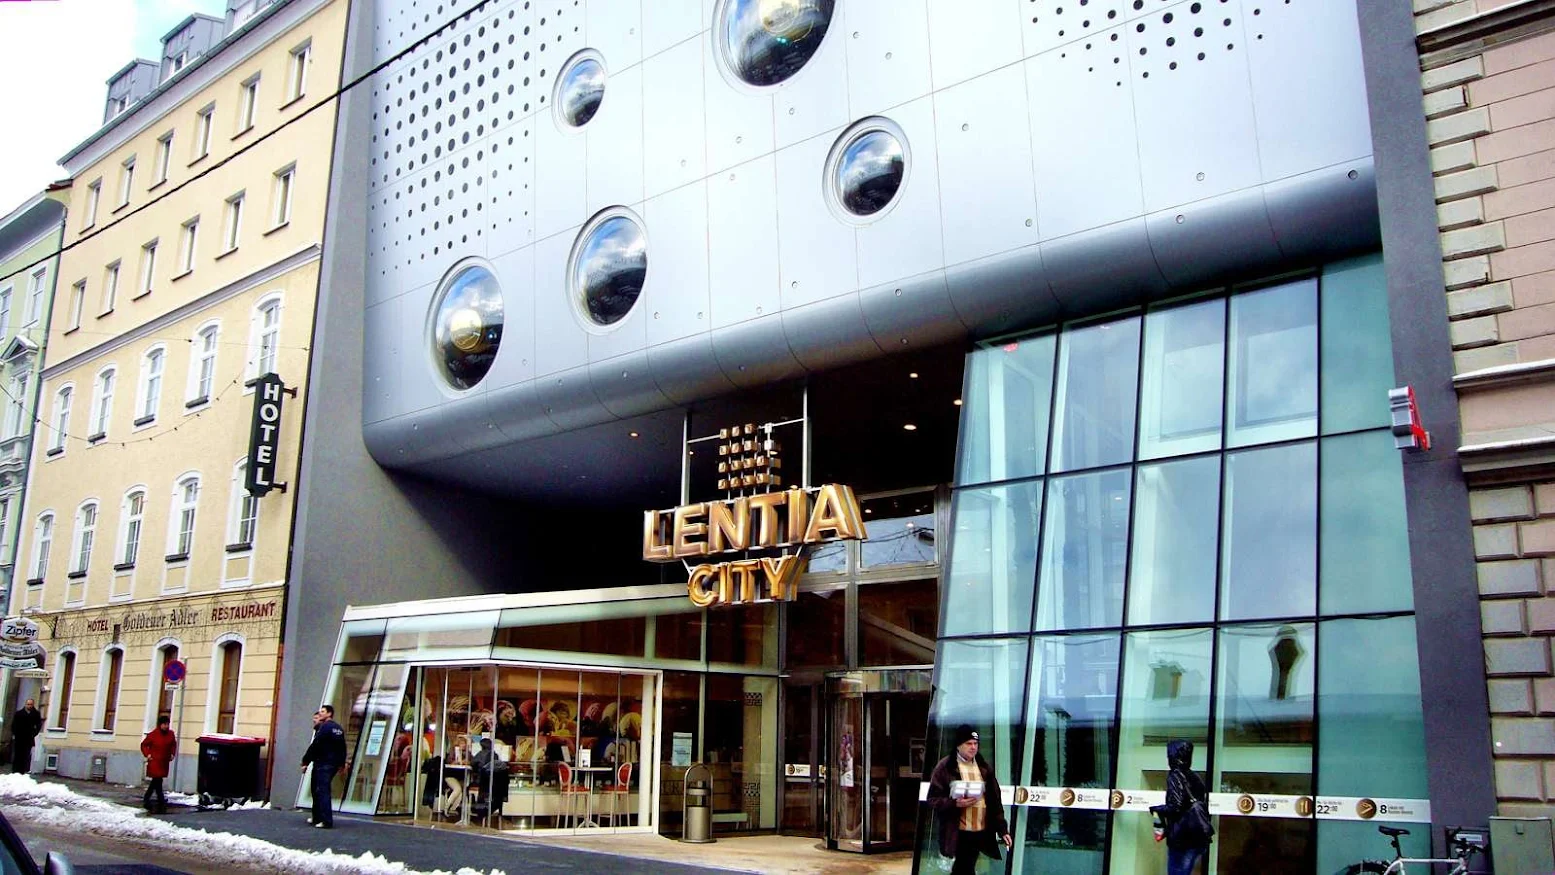 Lentia City by LOVE architecture